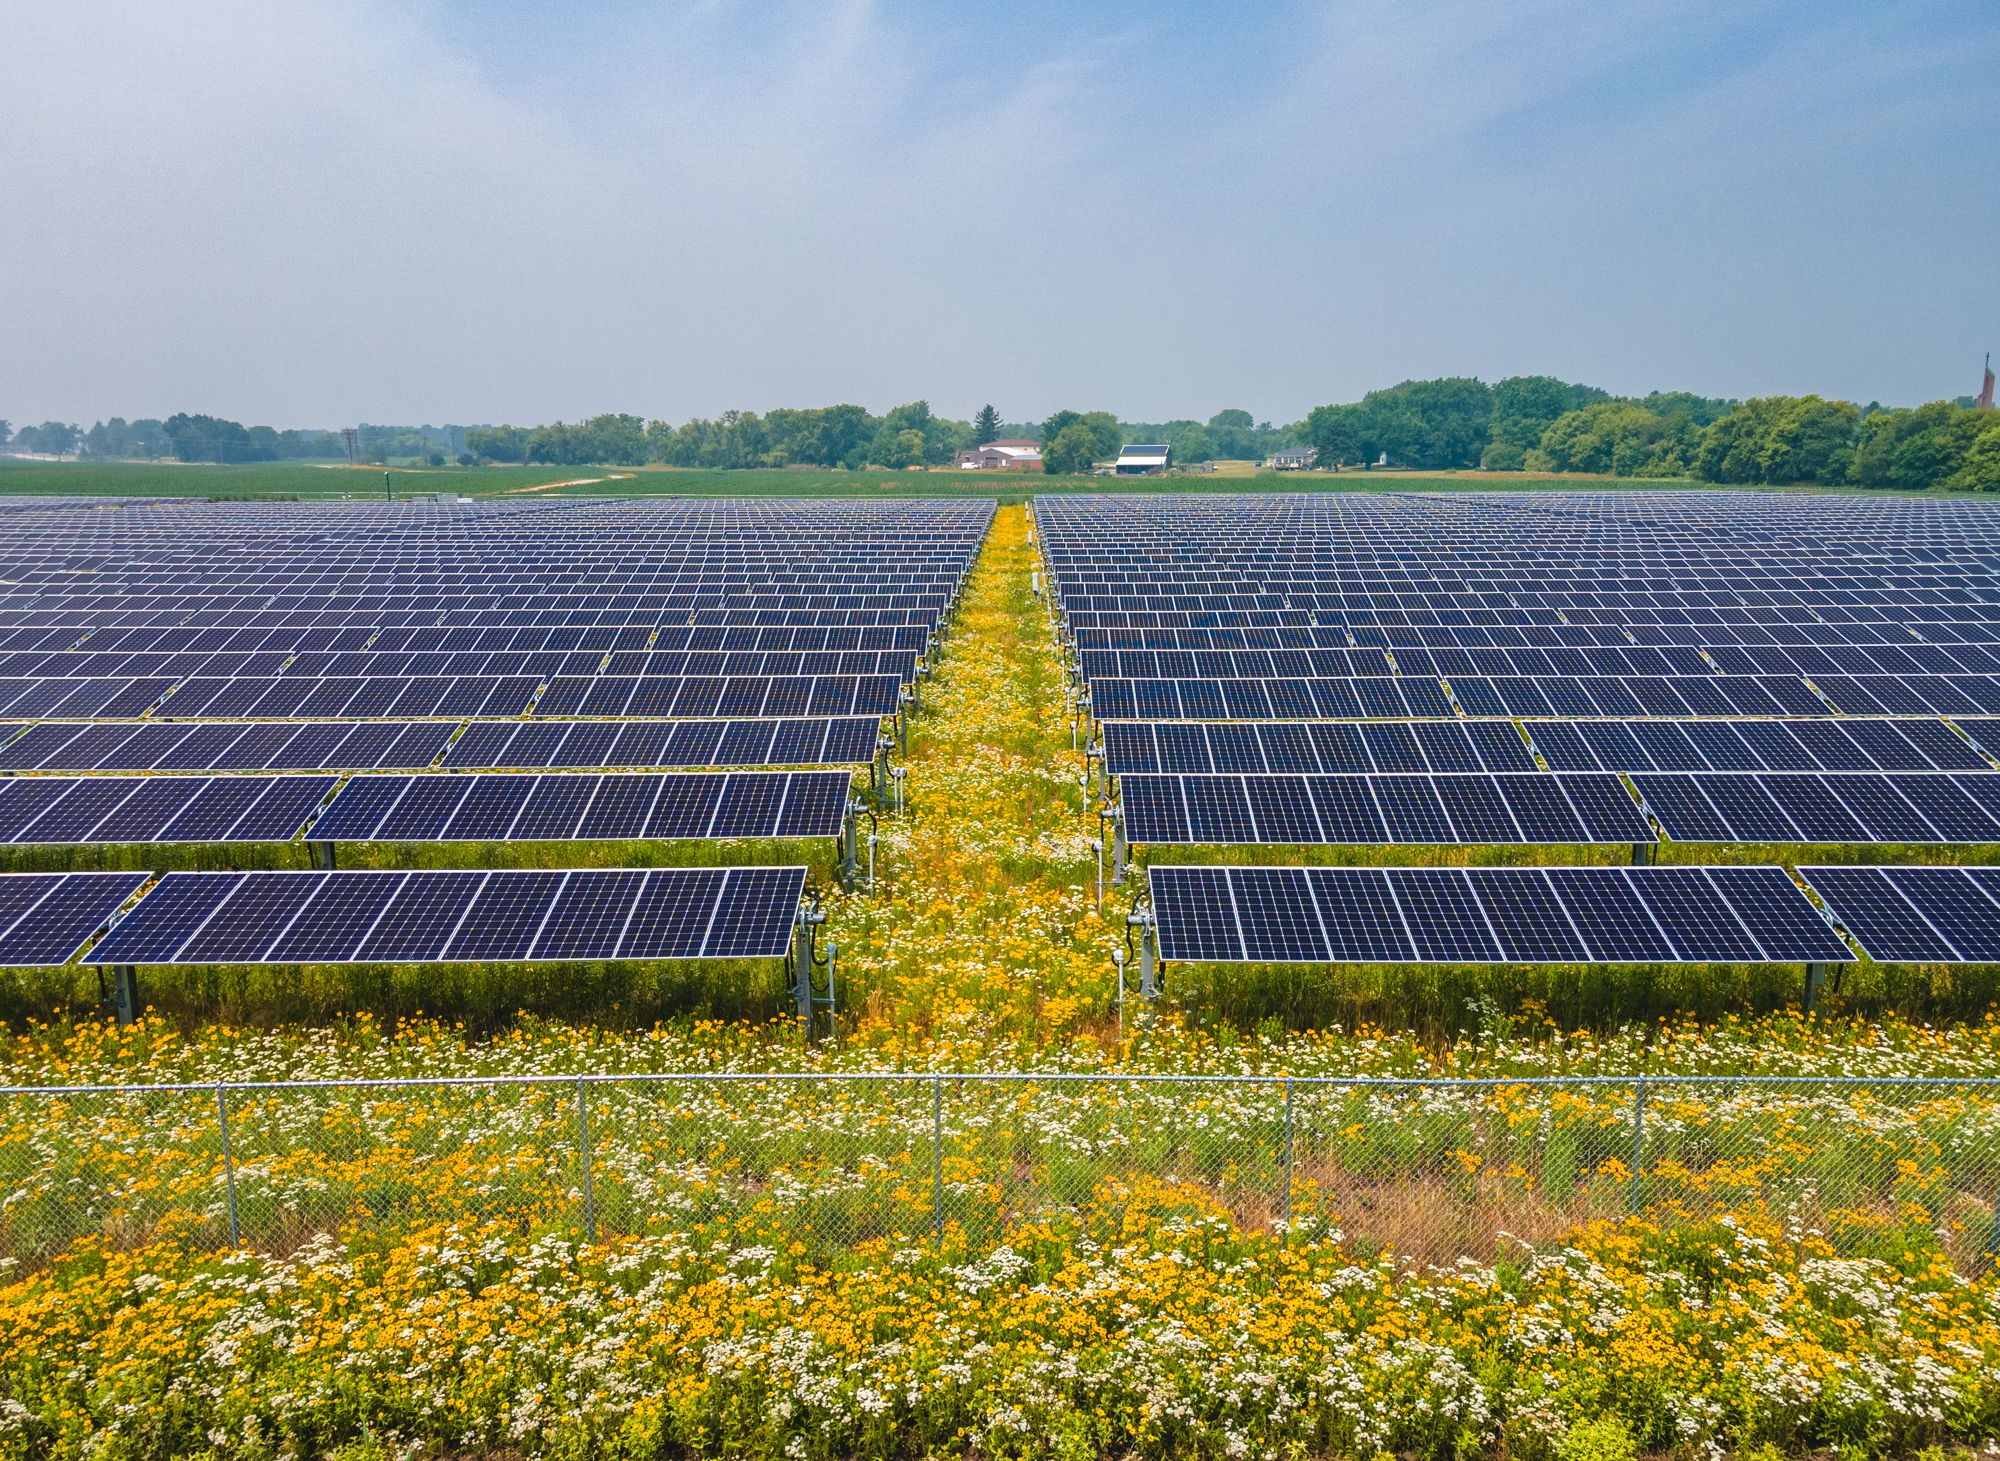 Illinois solar farm with native pollinator vegetation growing